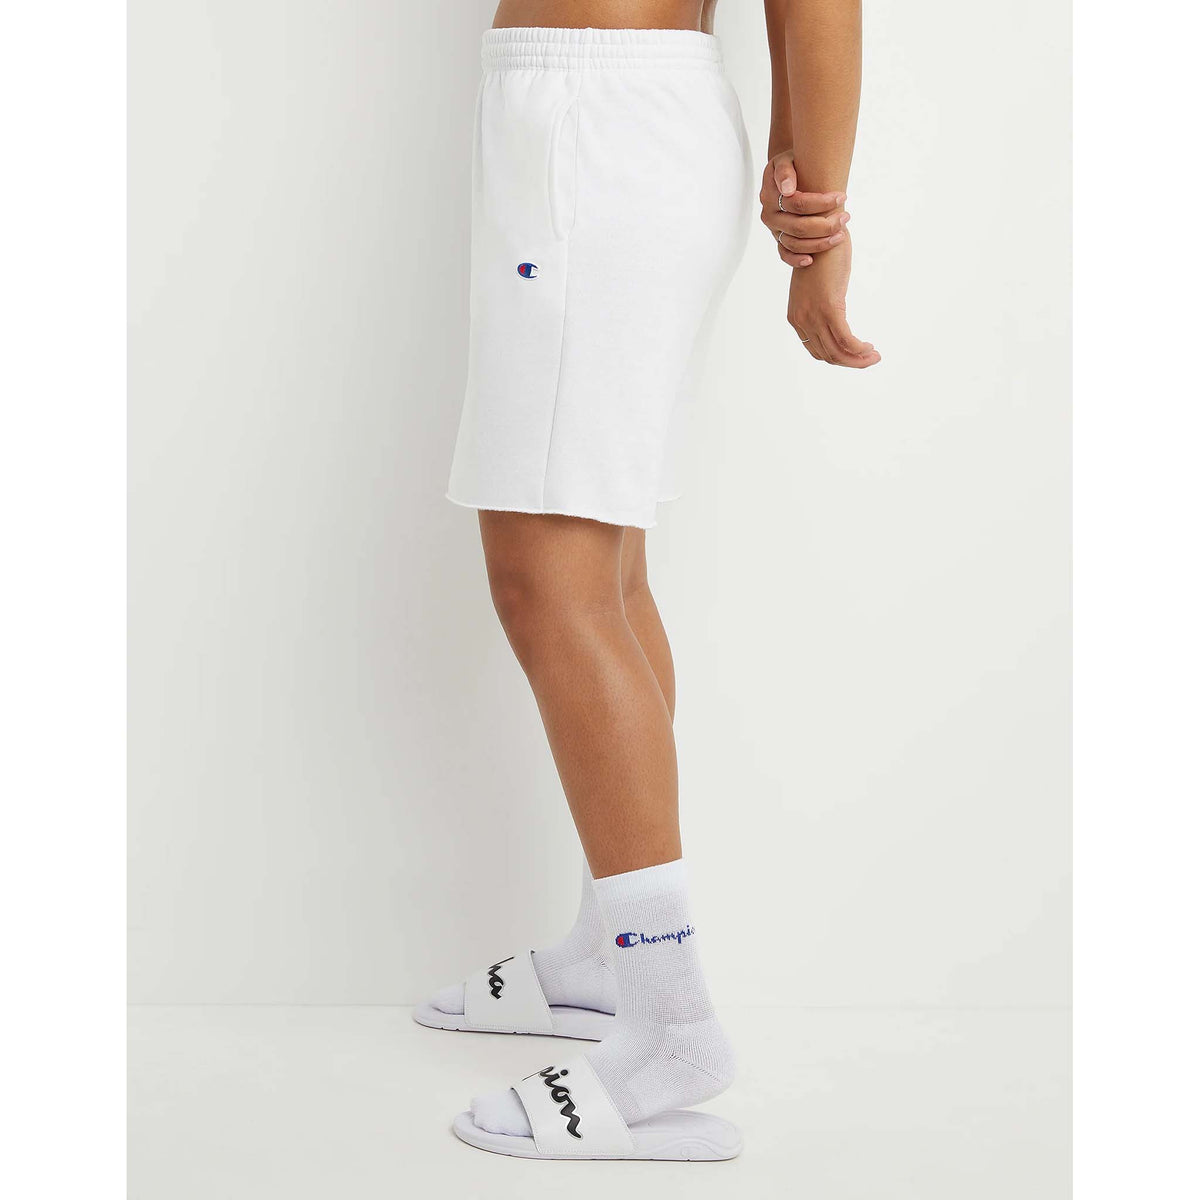 Champion Powerblend 6.5 Inch shorts blanc femme lateral gauche